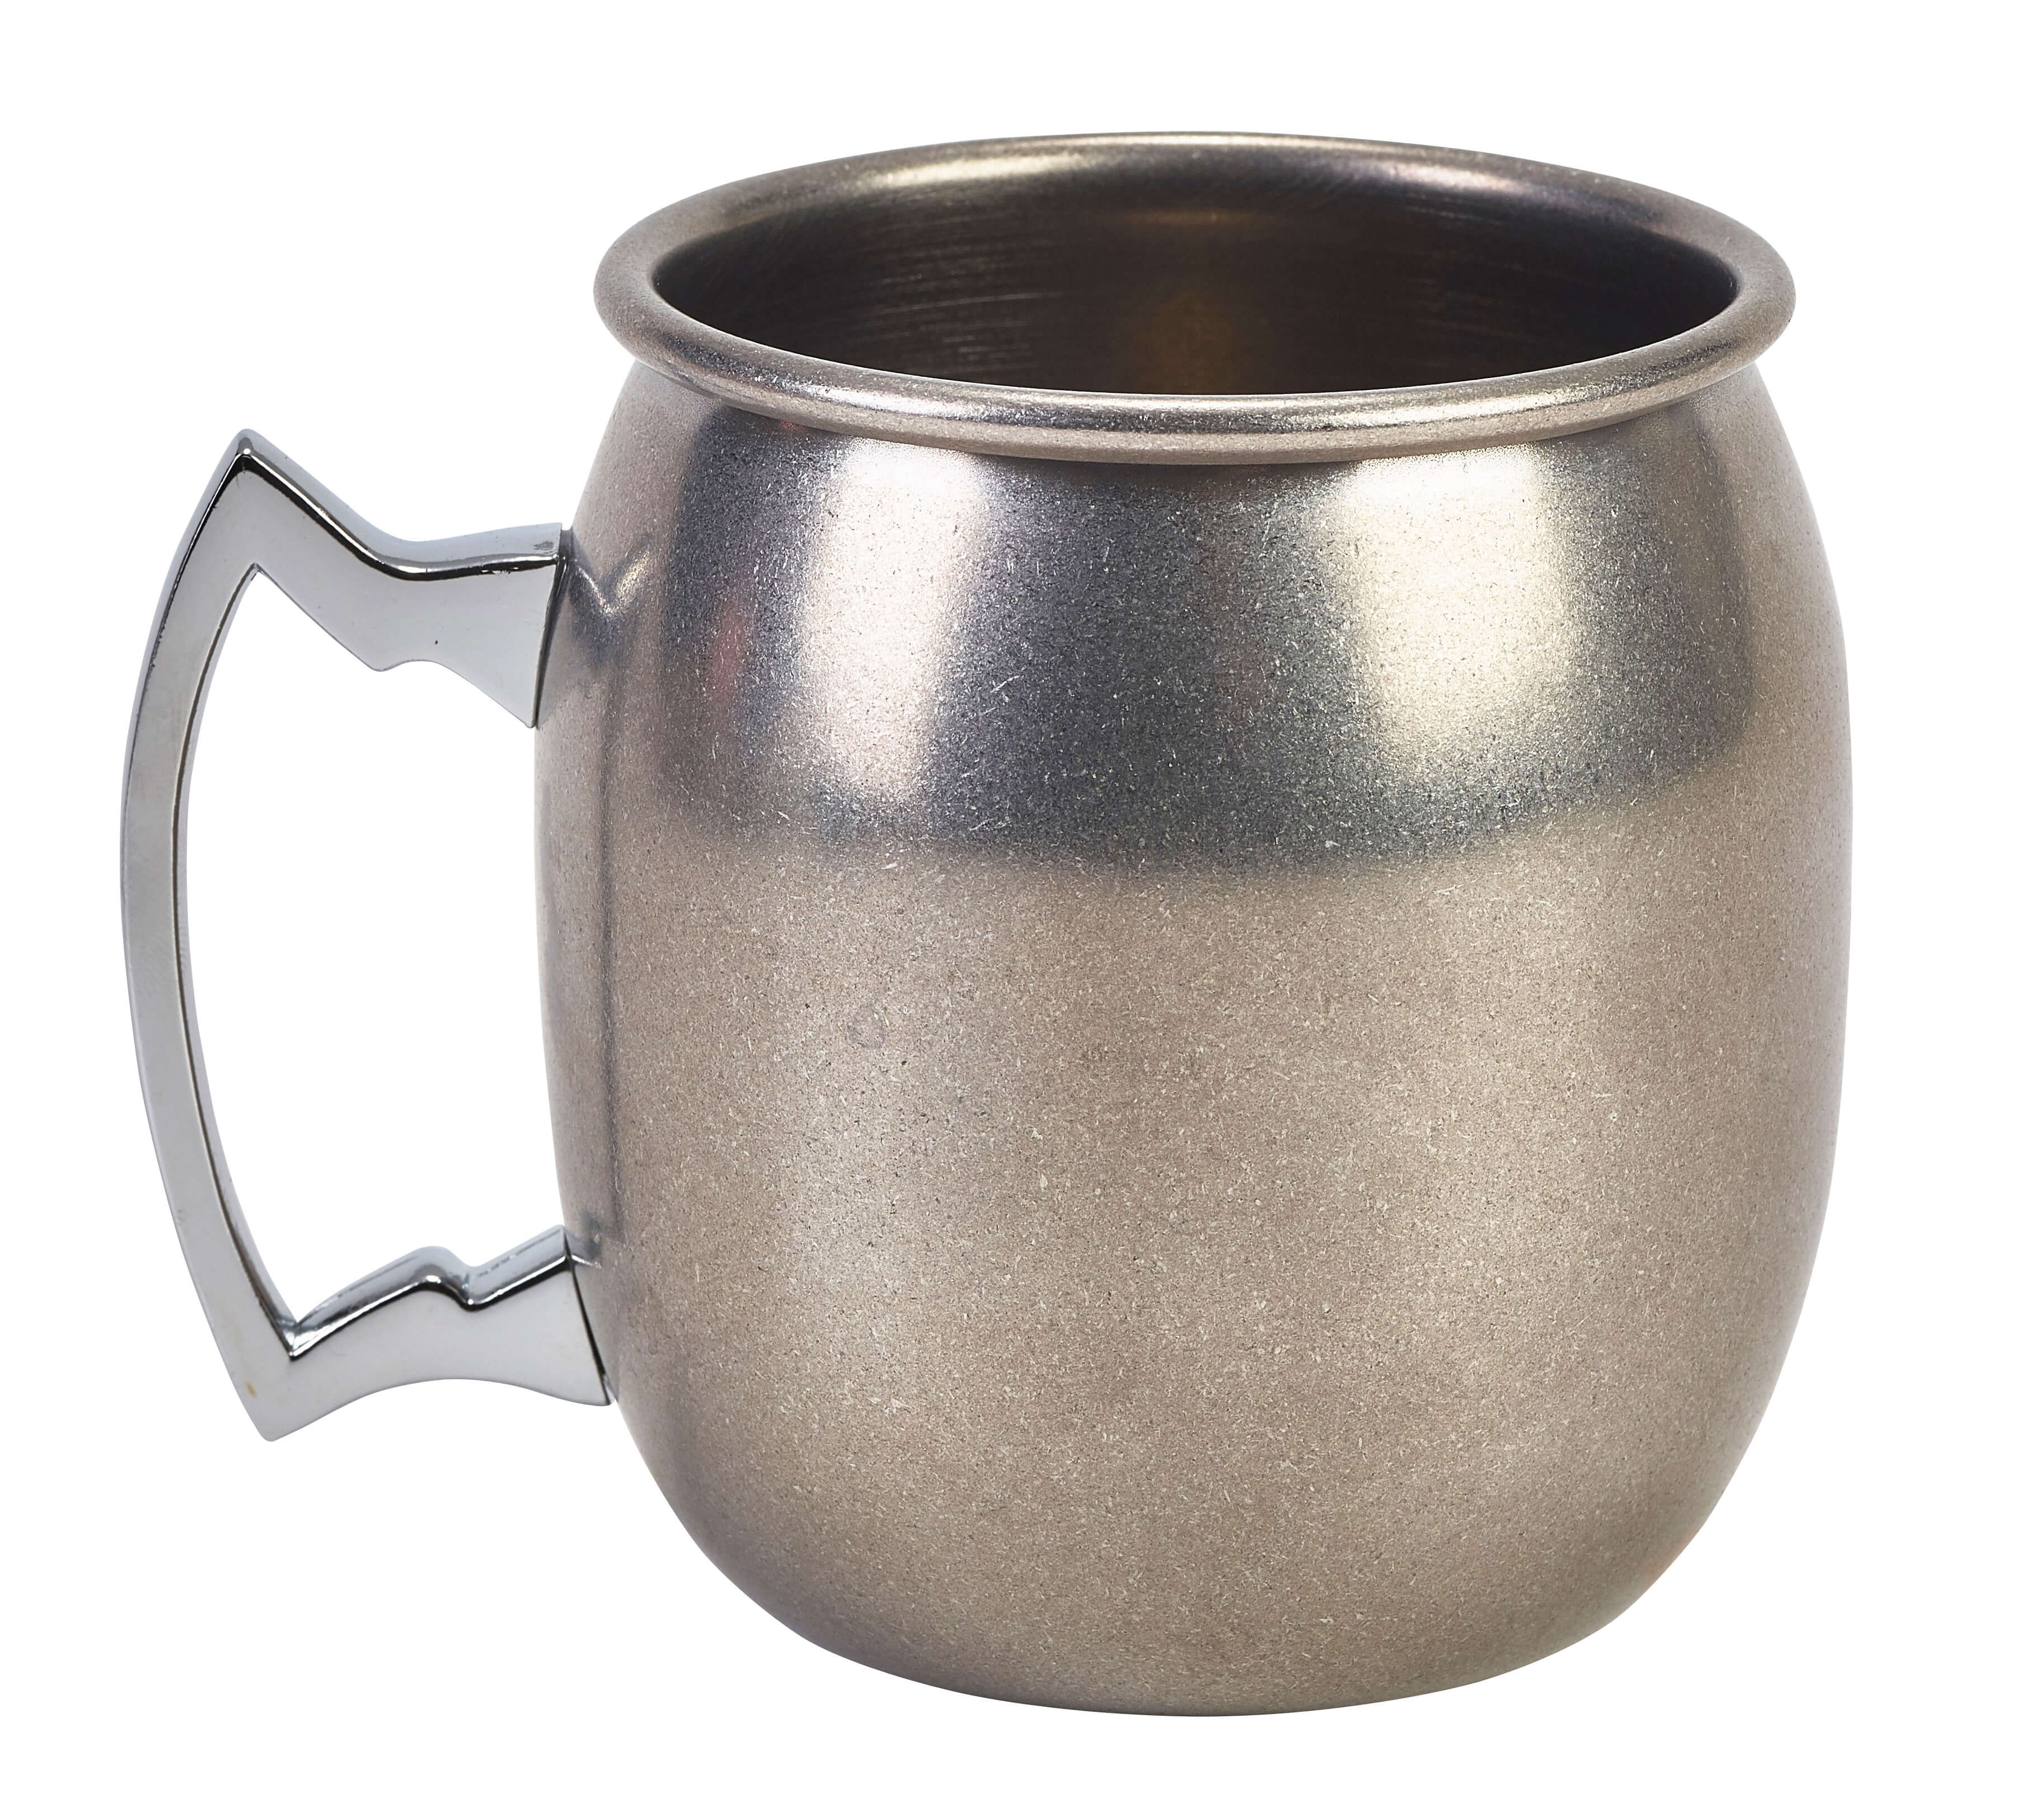 Moscow Mule mug, vintage stainless steel, plain - 400ml